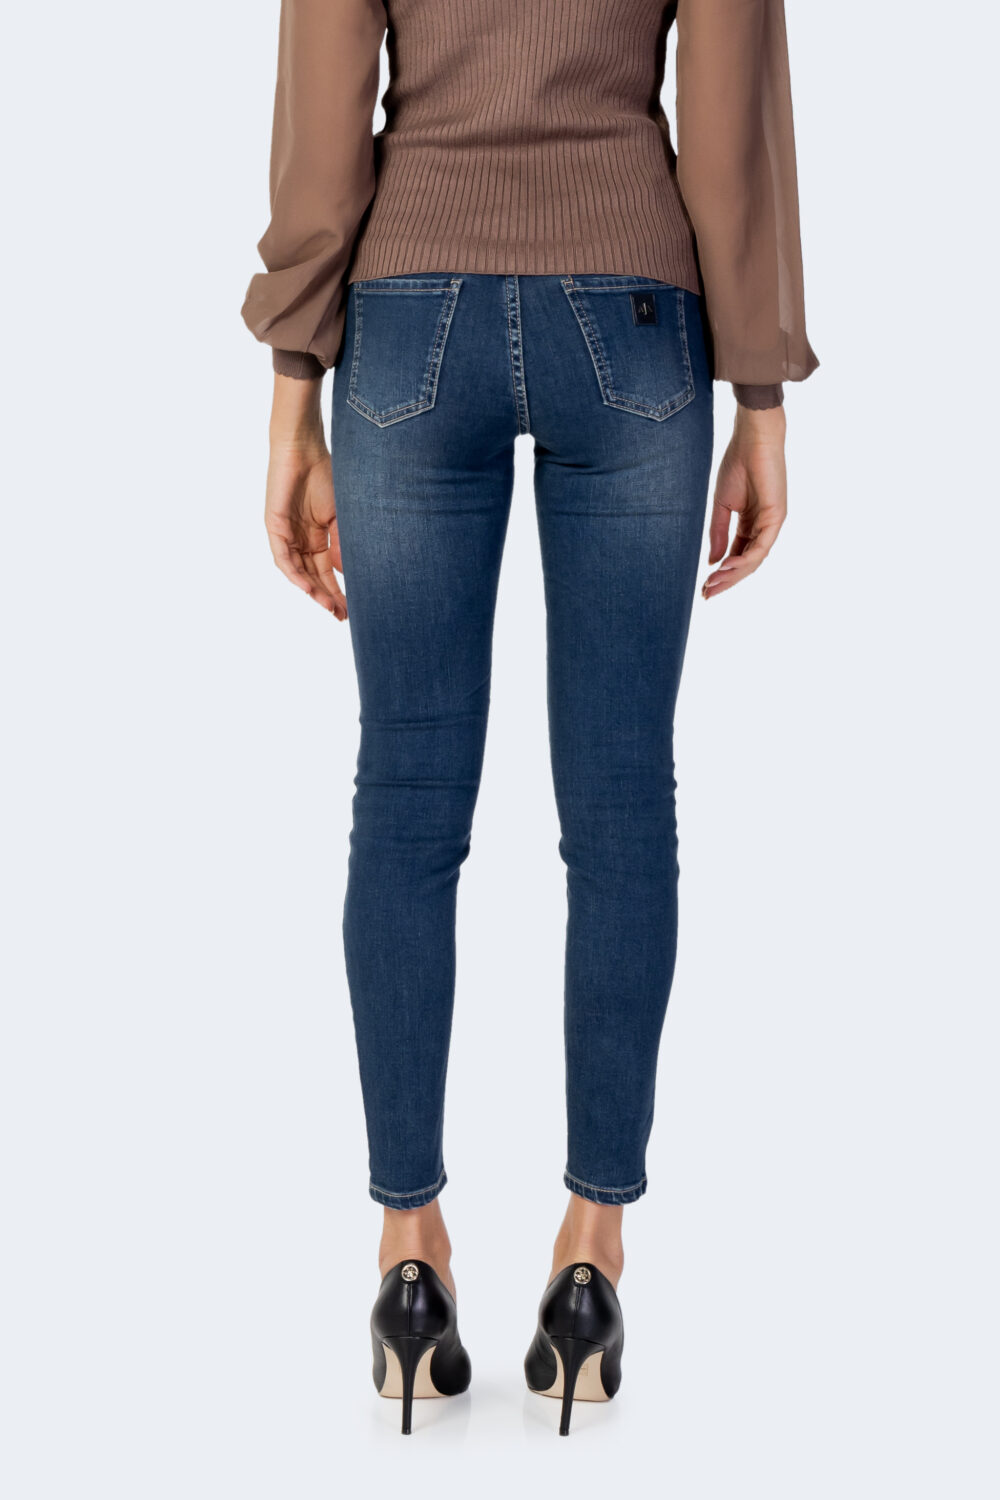 Jeans slim Armani Exchange 5 POCKETS Indigo - Foto 4